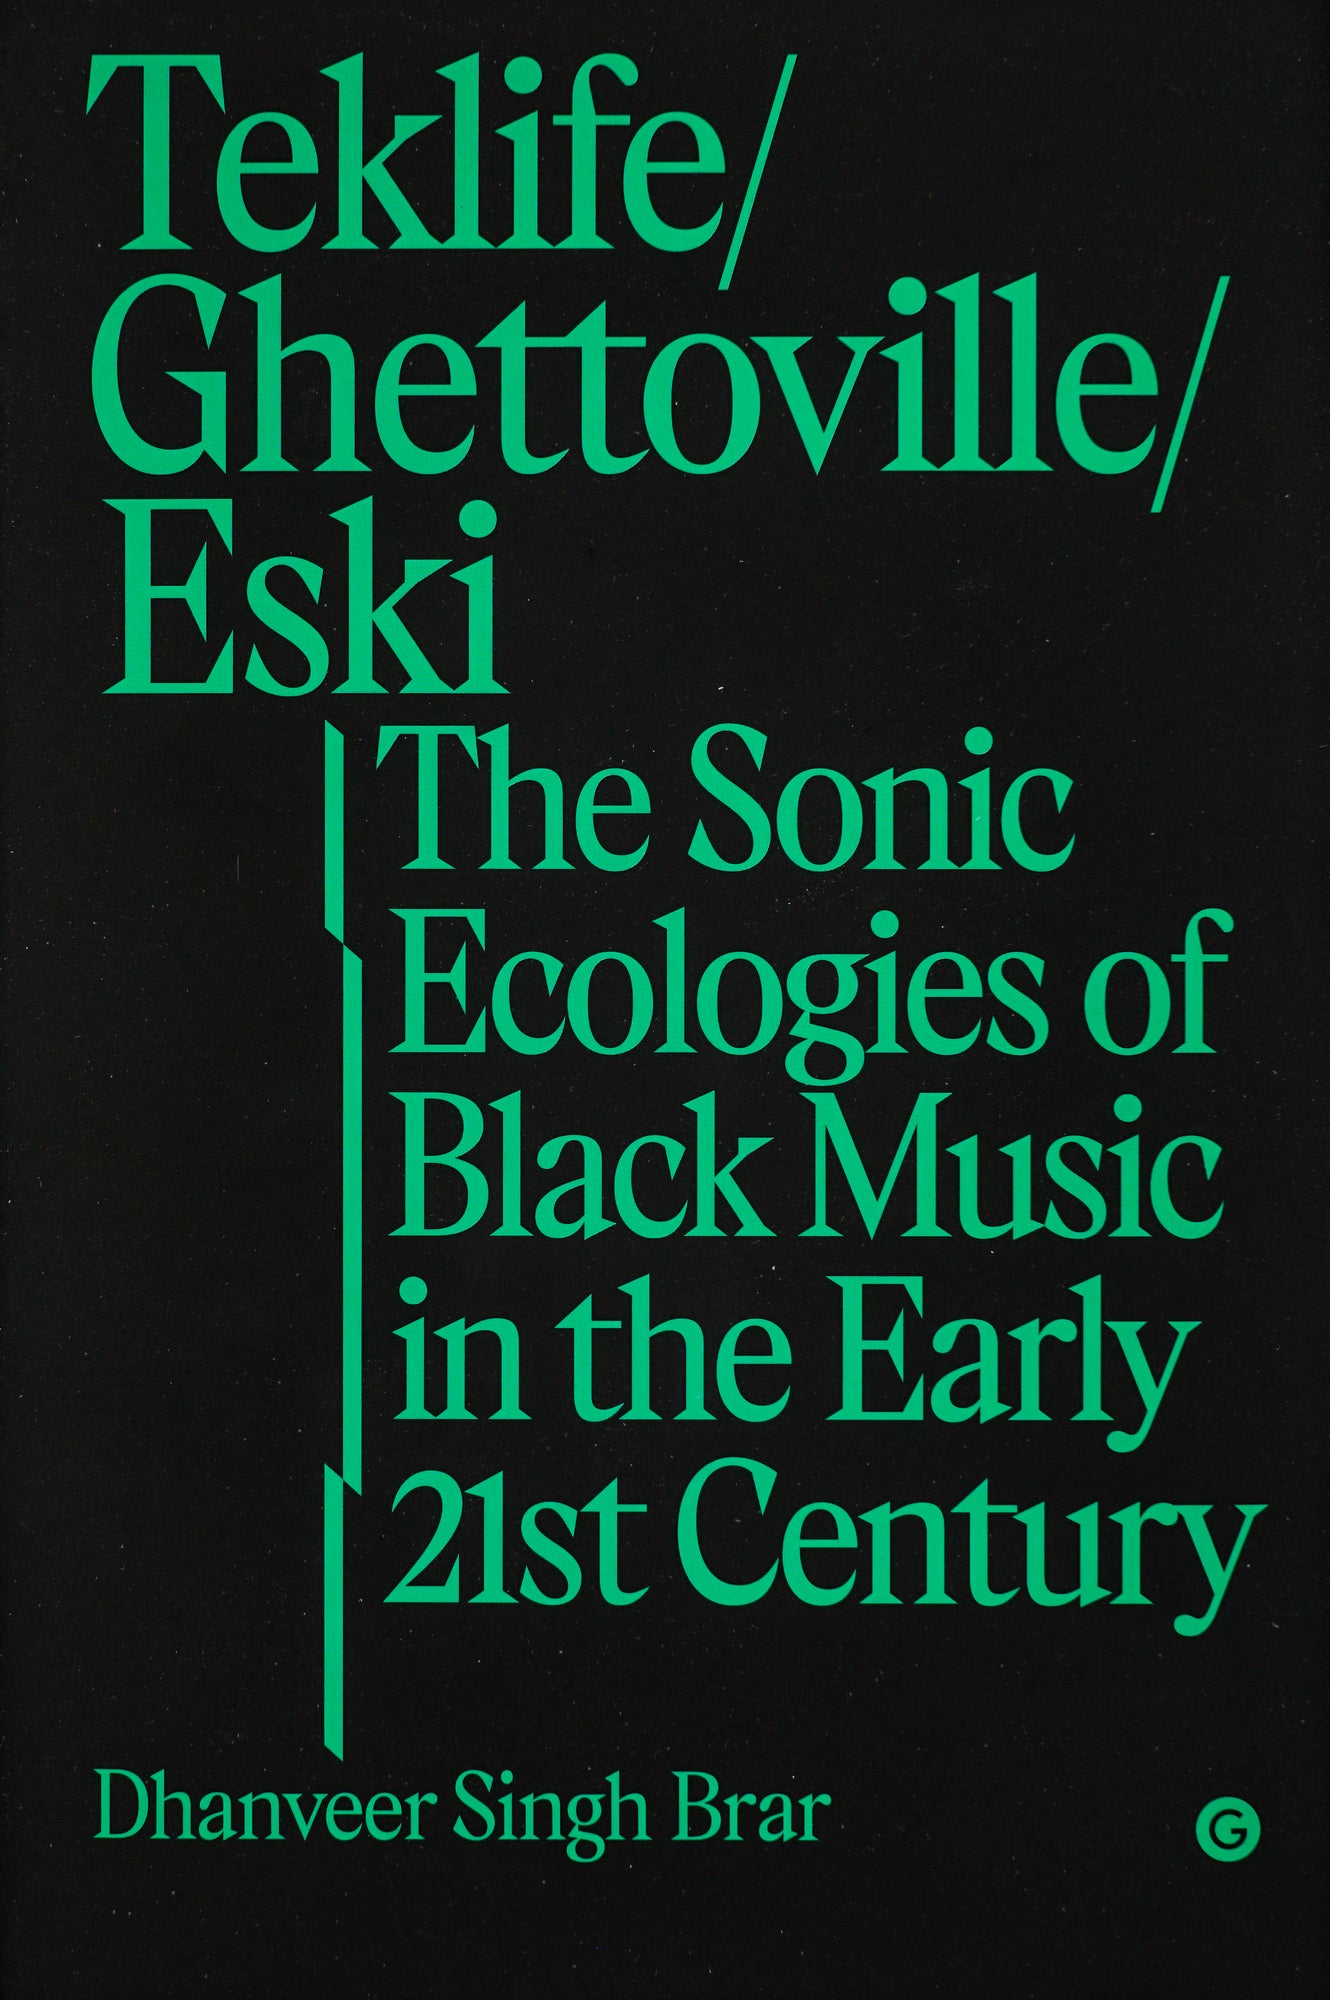 Teklife, Ghettoville, Eski The Sonic Ecologies of Black Music in the Early 21st Century